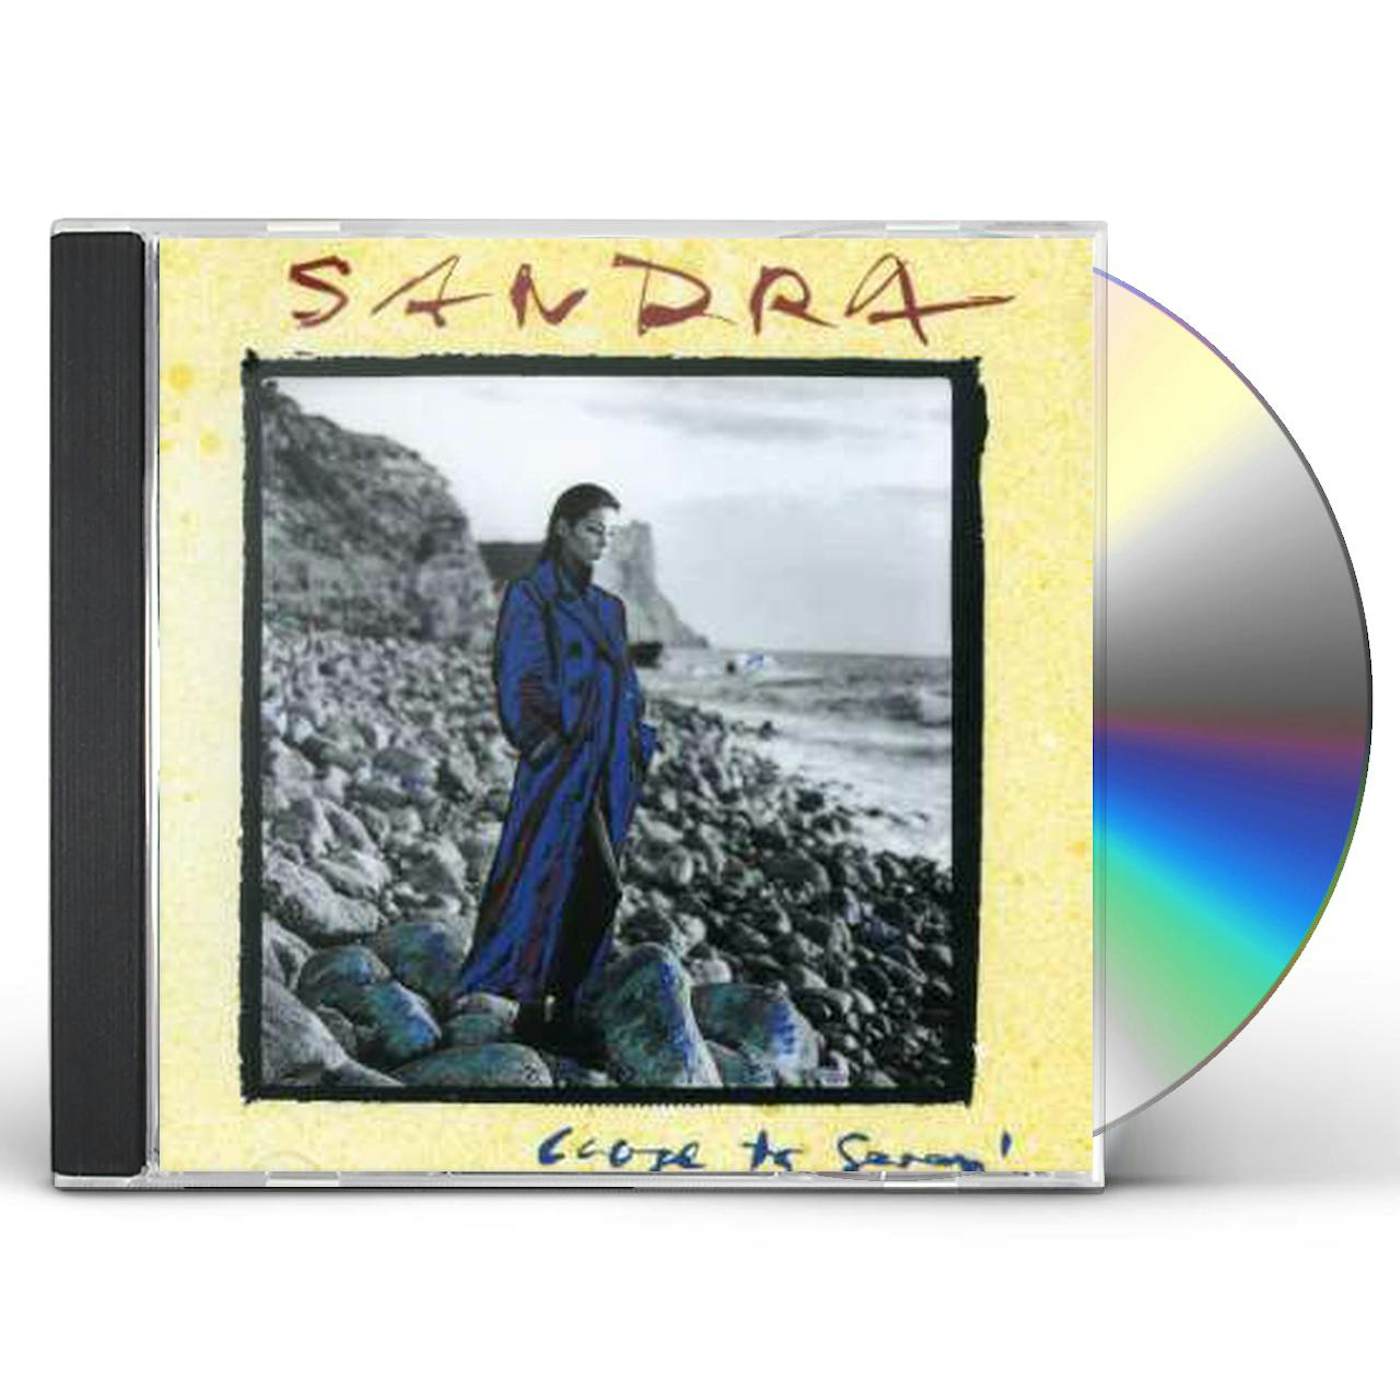 Sandra CLOSE TO SEVEN CD